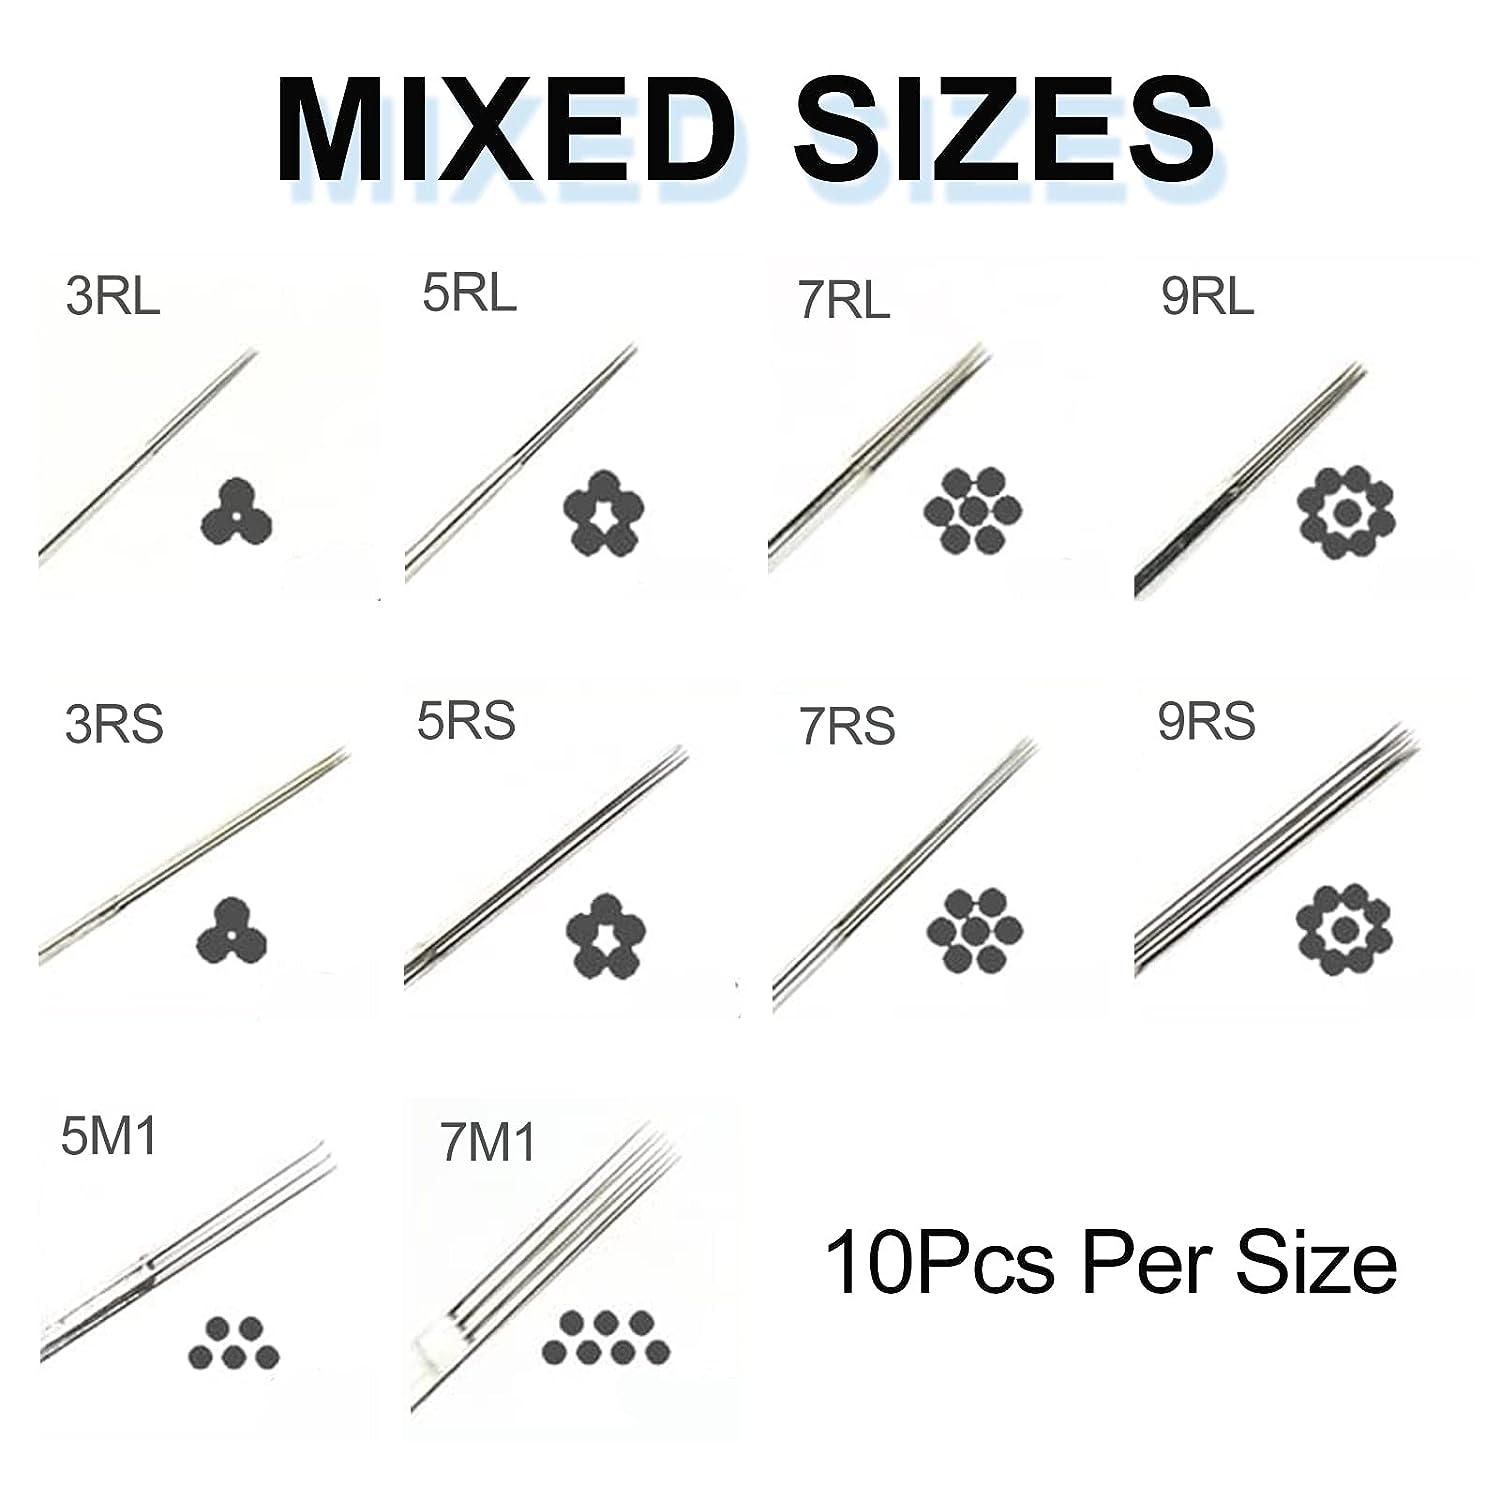 TONBAO 100pcs Stick and Poke Needles 3RL, 5RL, 7RL, 9RL, 3RS, 5RS, 7RS,  9RS, 5M1, 7M1